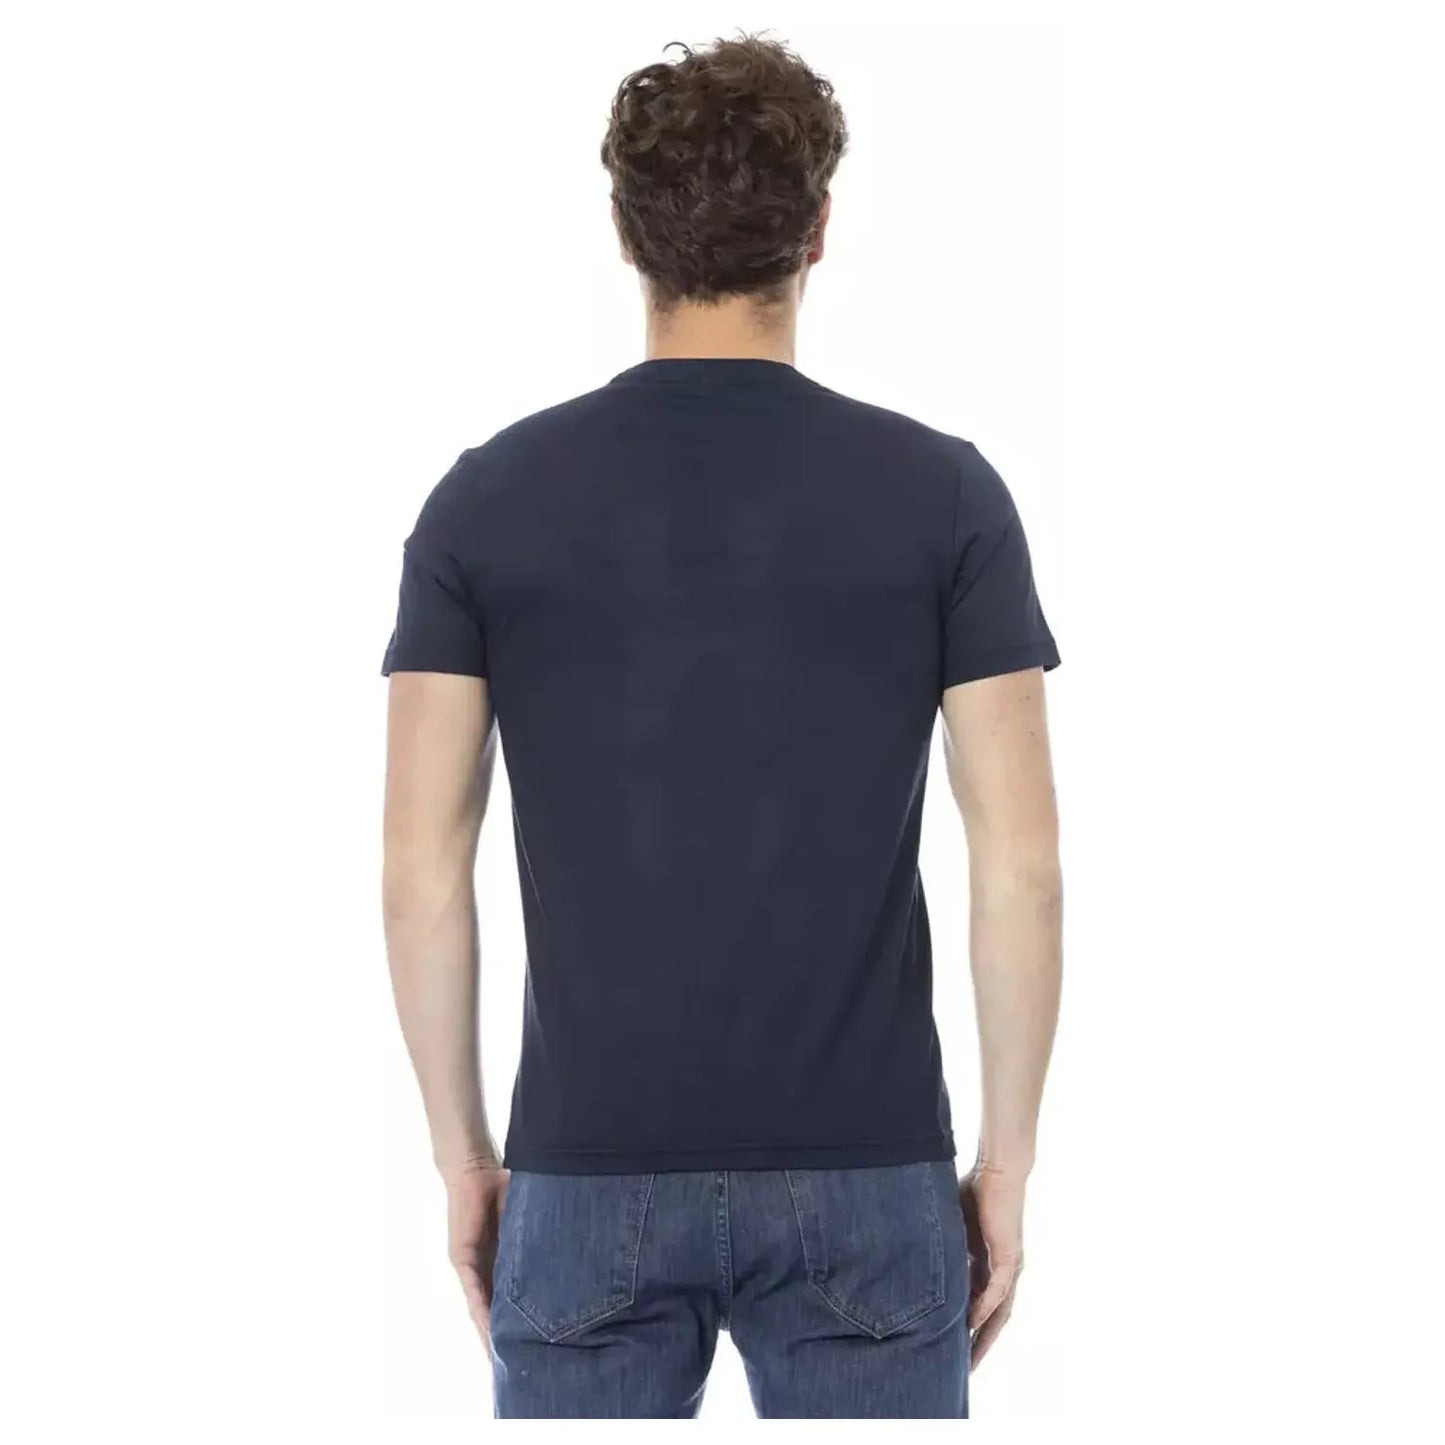 Baldinini Trend Sleek Blue Cotton Tee with Front Print blue-cotton-t-shirt-119